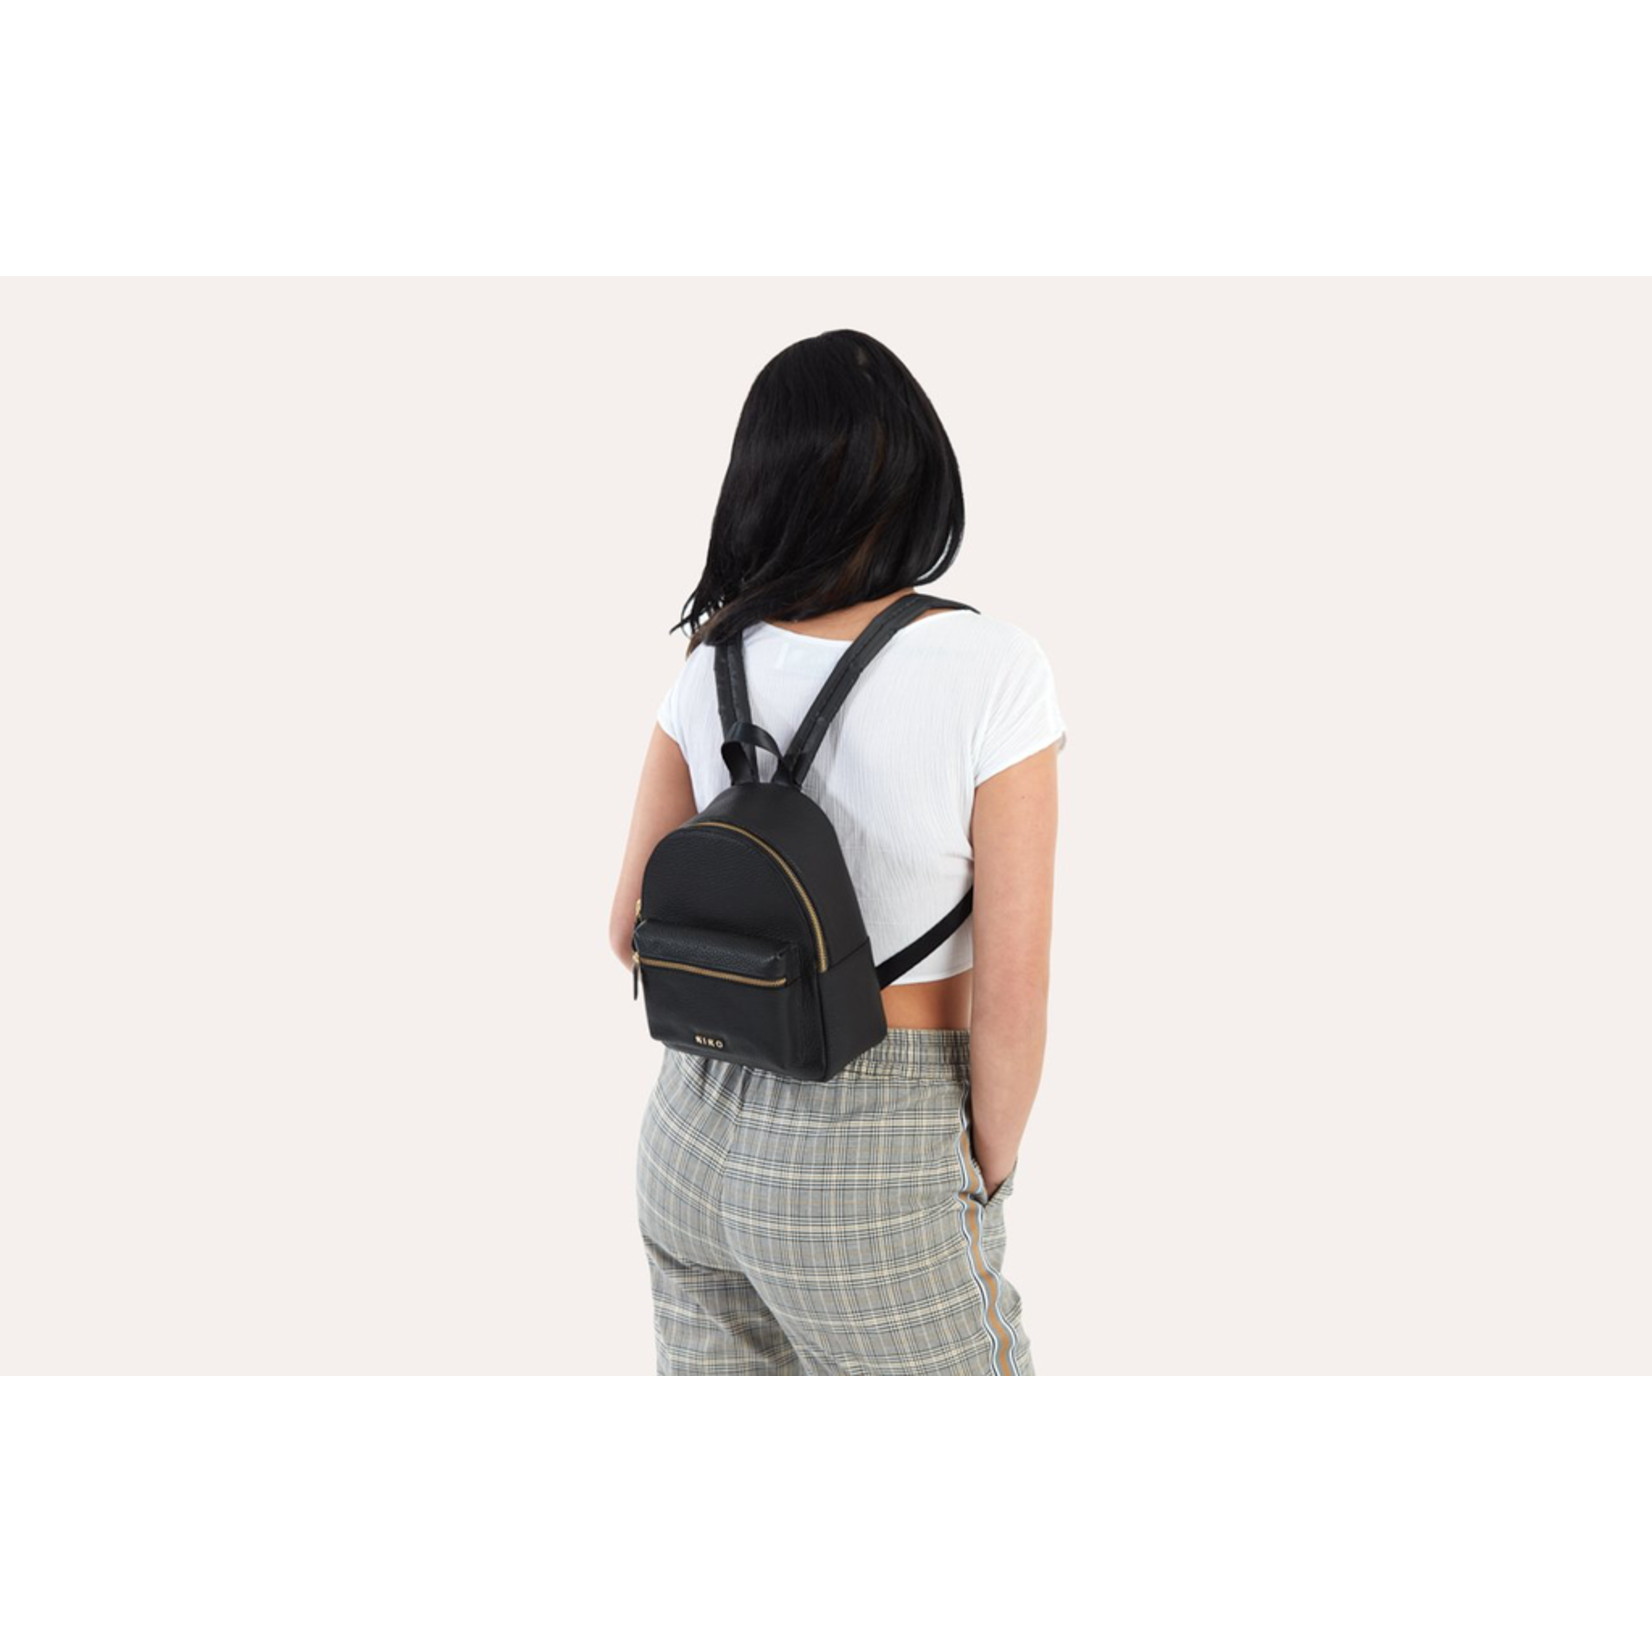 Kiko Leather Small Backpack